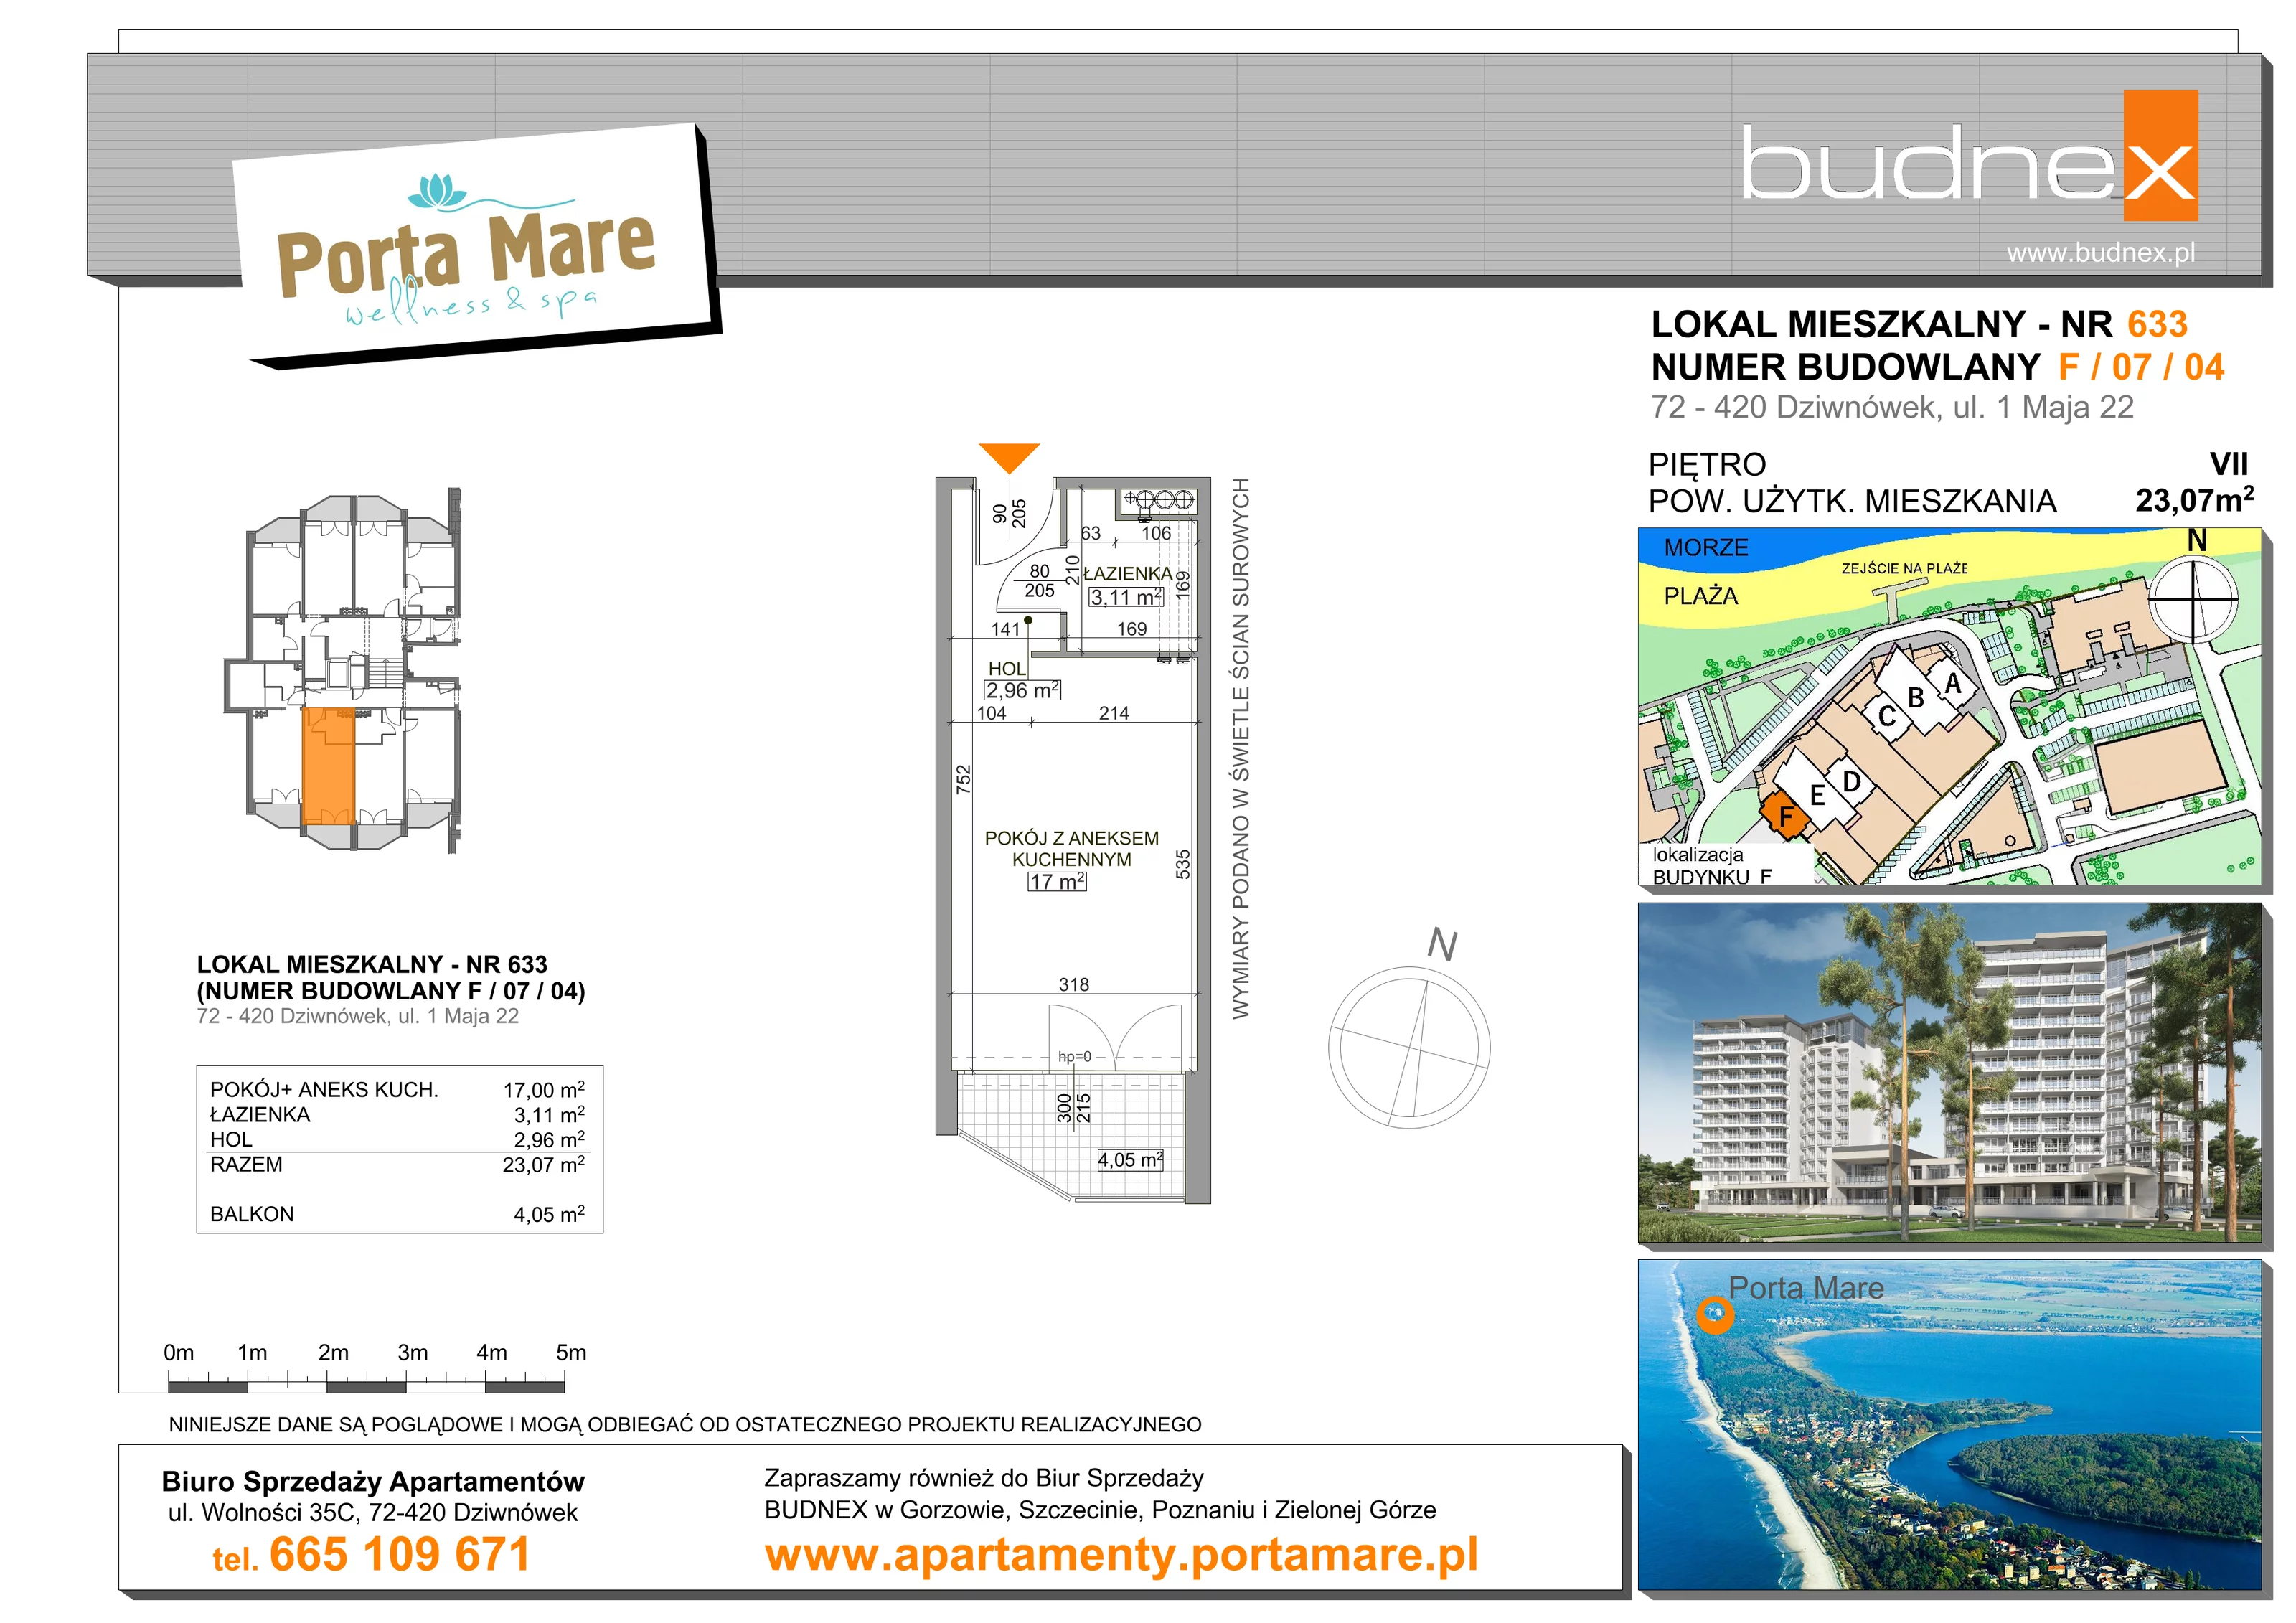 Apartament 23,07 m², piętro 7, oferta nr 633, Porta Mare Wellness & Spa, Dziwnówek, ul. Wolności